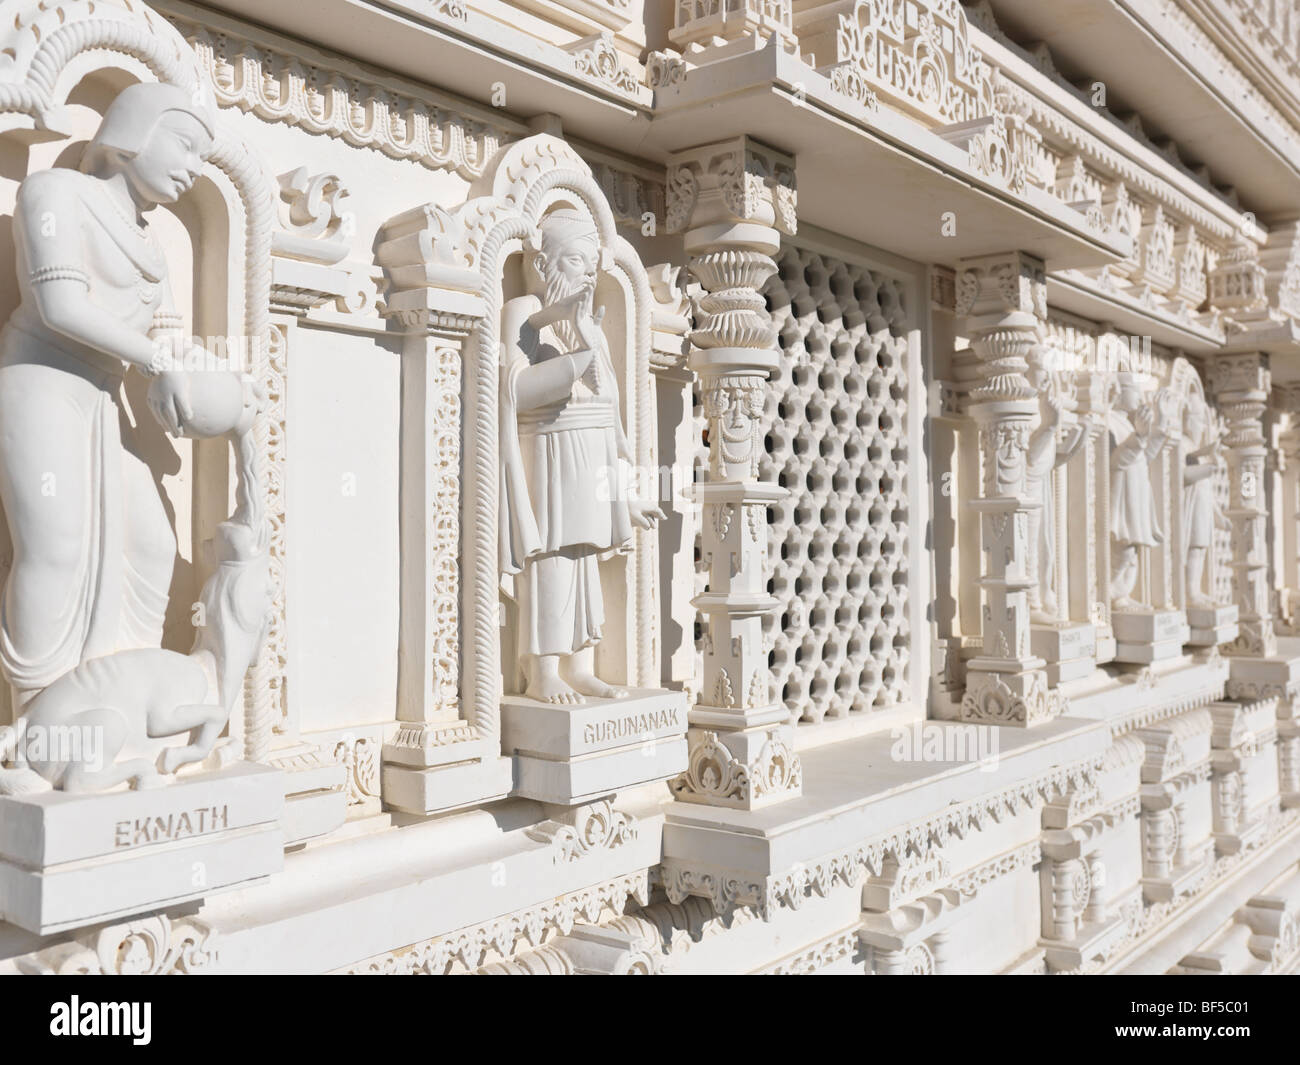 Le Swaminarayan Mandir en marbre blanc sculpté à la main, temple hindou. Eknath et Gurunanak sculptures. Toronto, Ontario, Canada. Banque D'Images